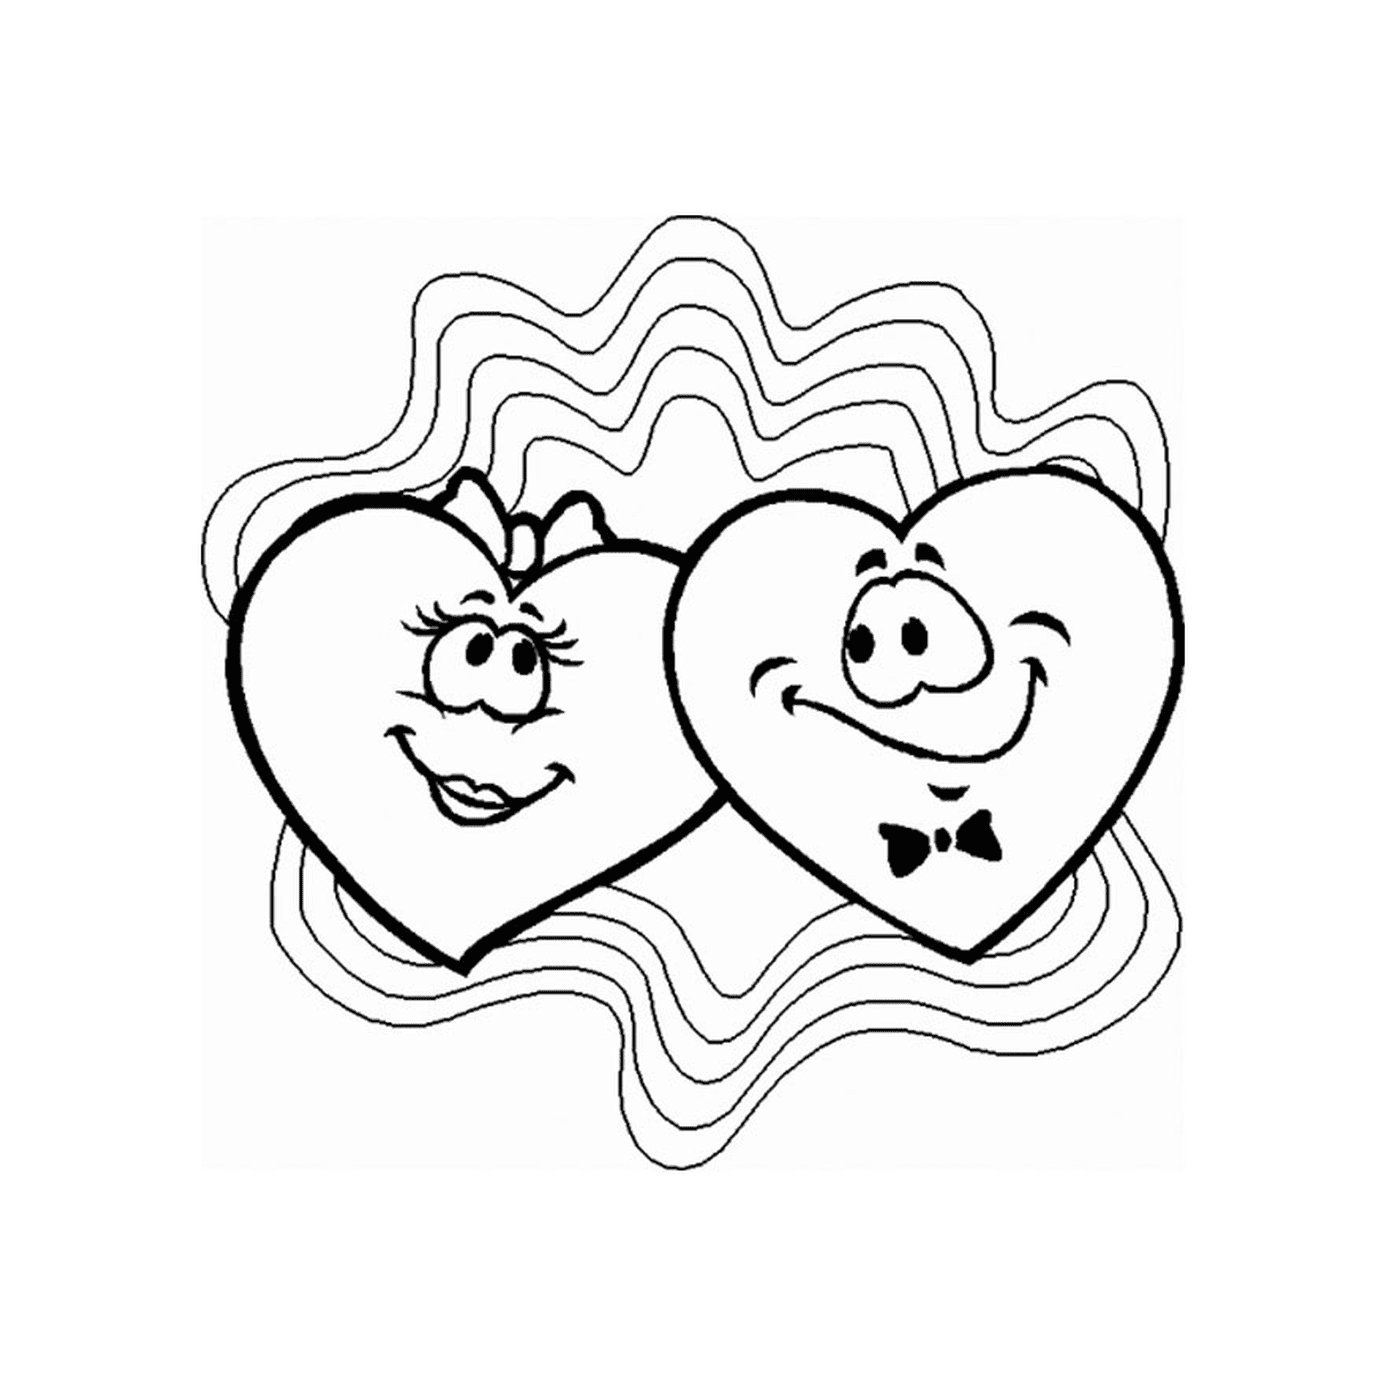  Два улыбающихся сердца 